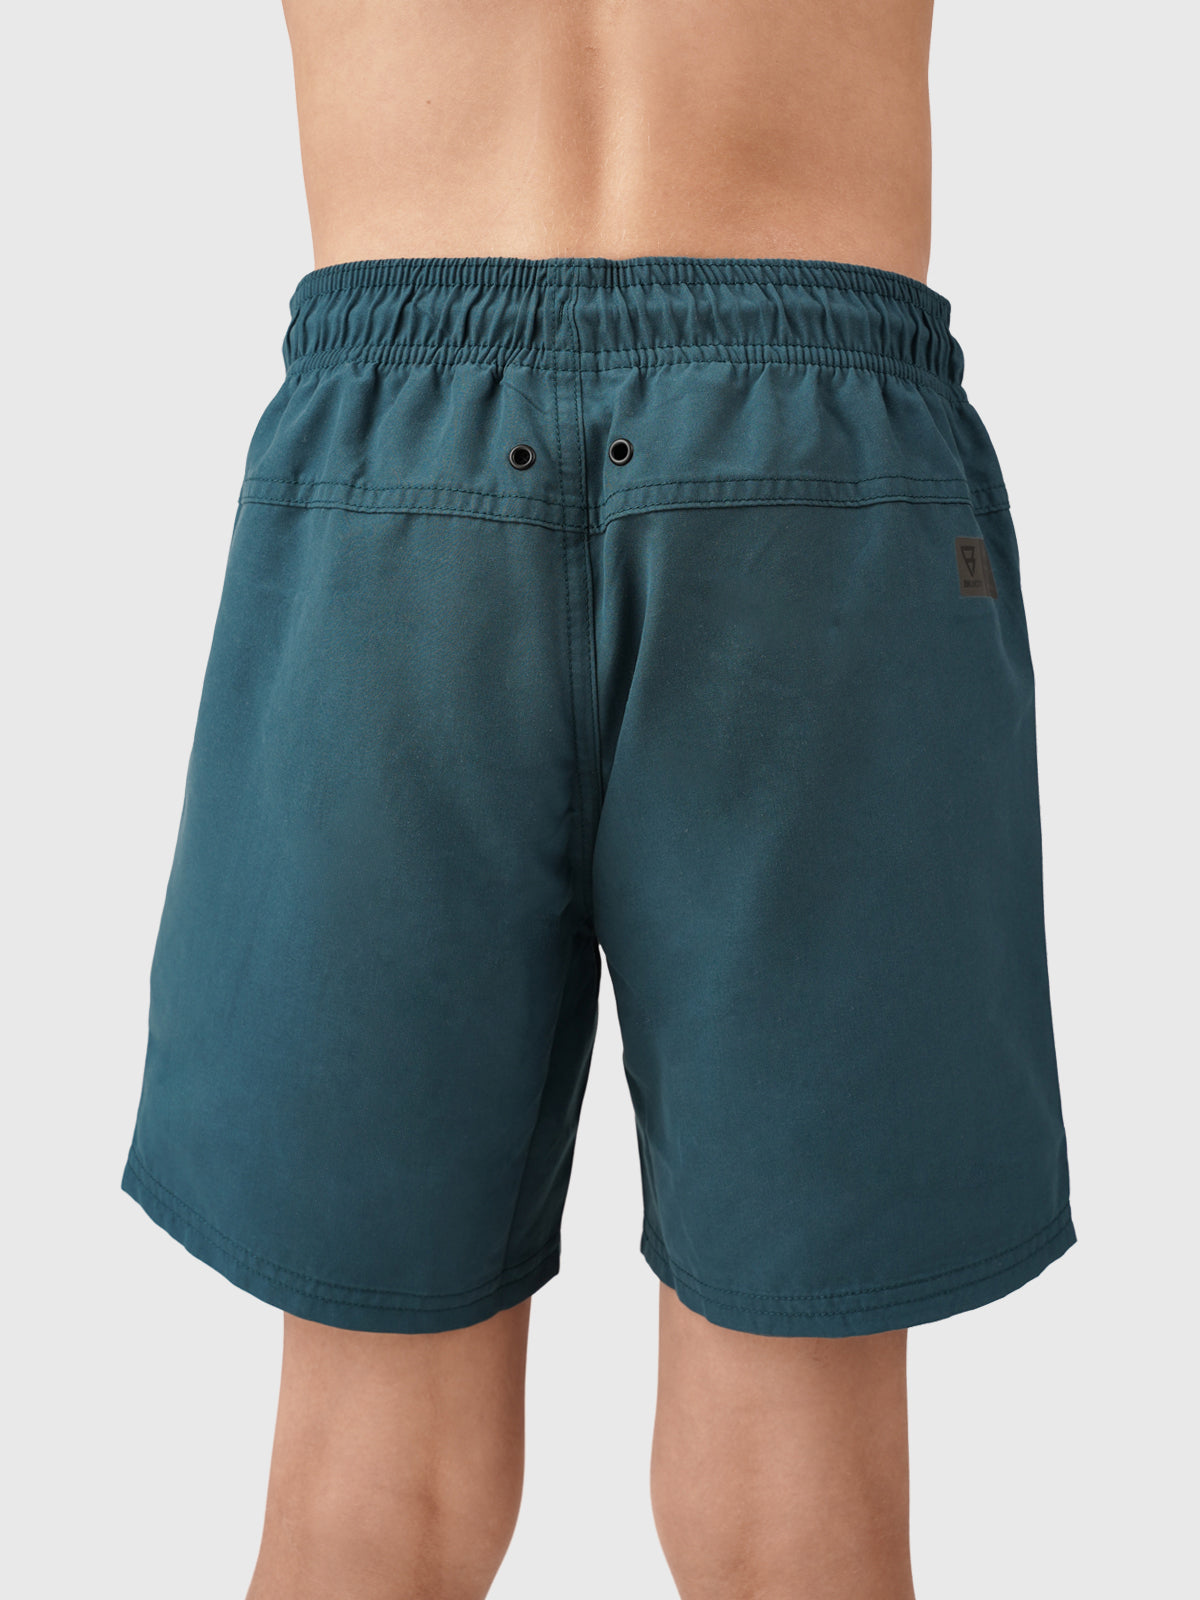 Crunotos Boys Swim Shorts | Green